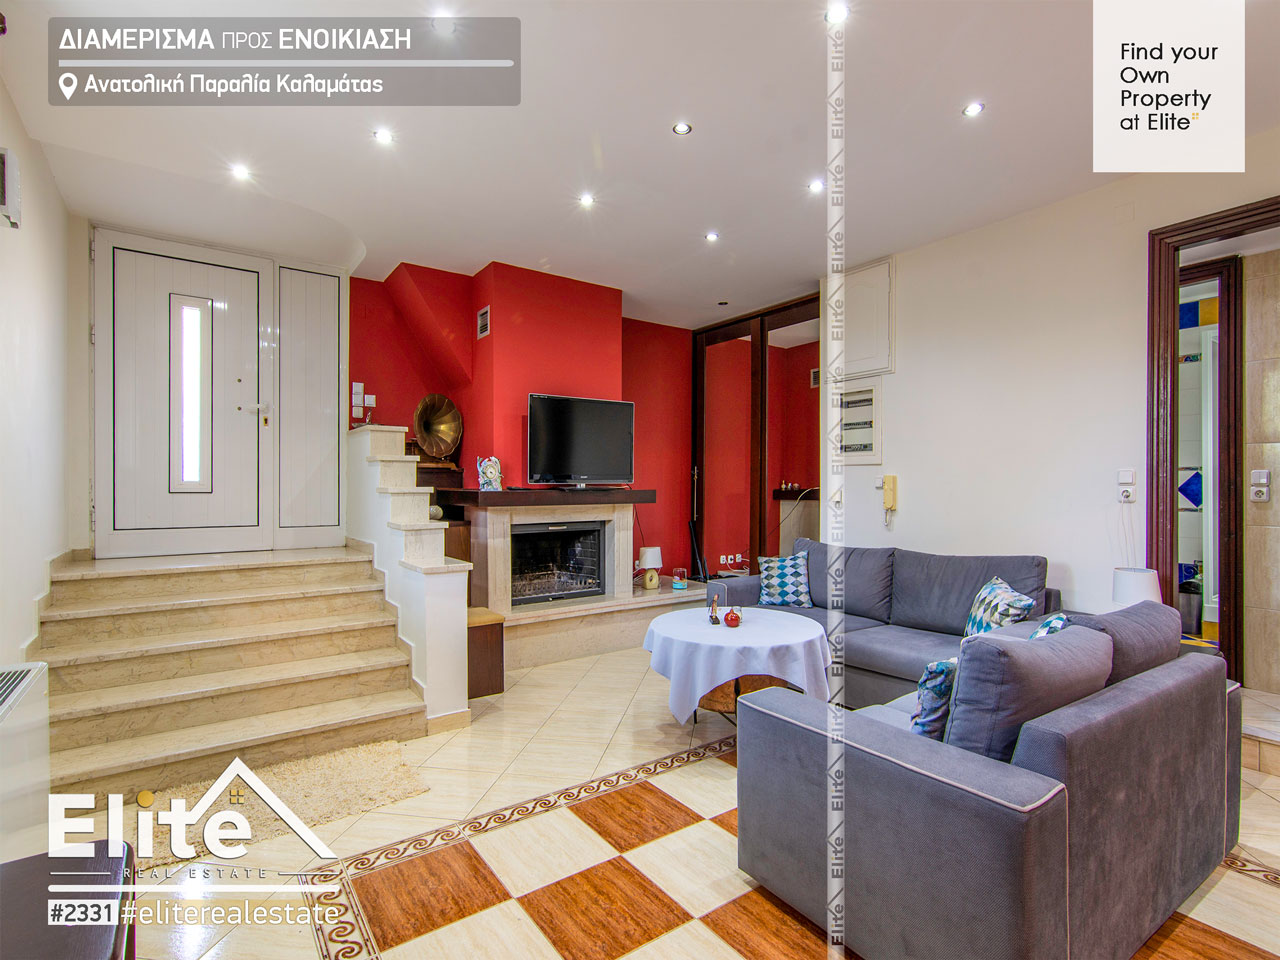 Location Kalamata Appartement #2331 100 m² | ELITE REAL ESTATE